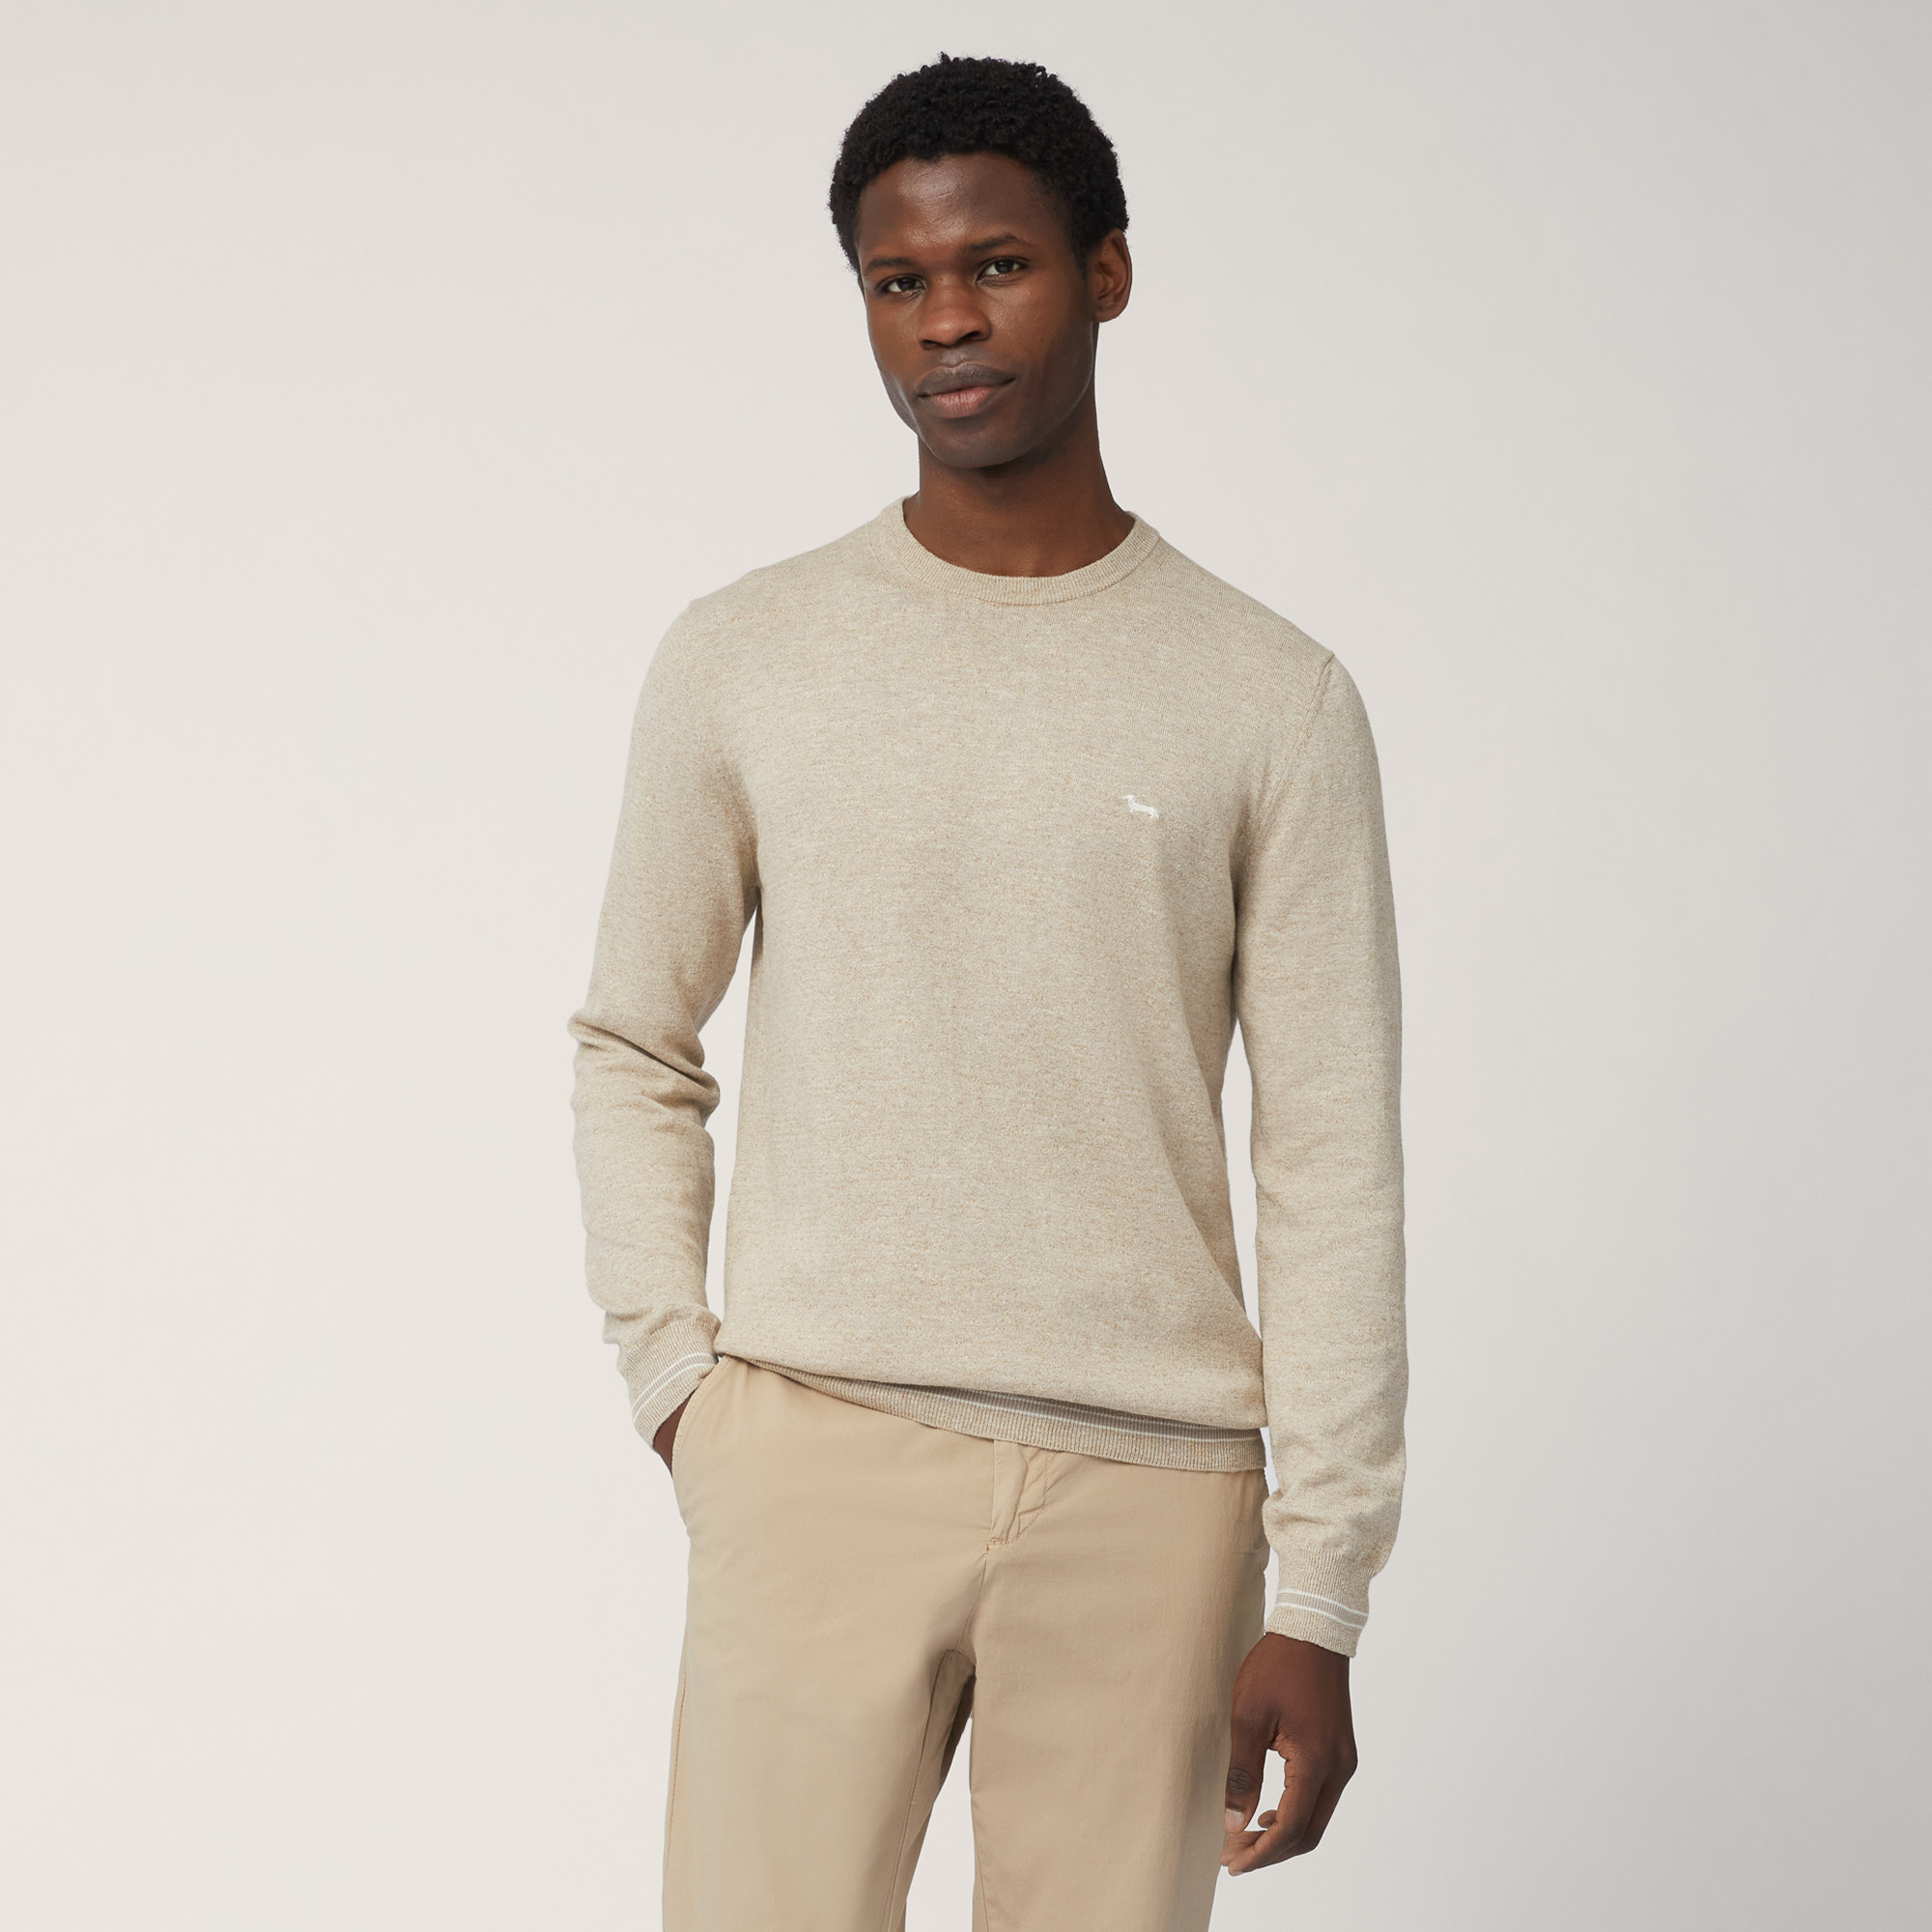 Cotton Blend Tweed Pullover, Beige, large